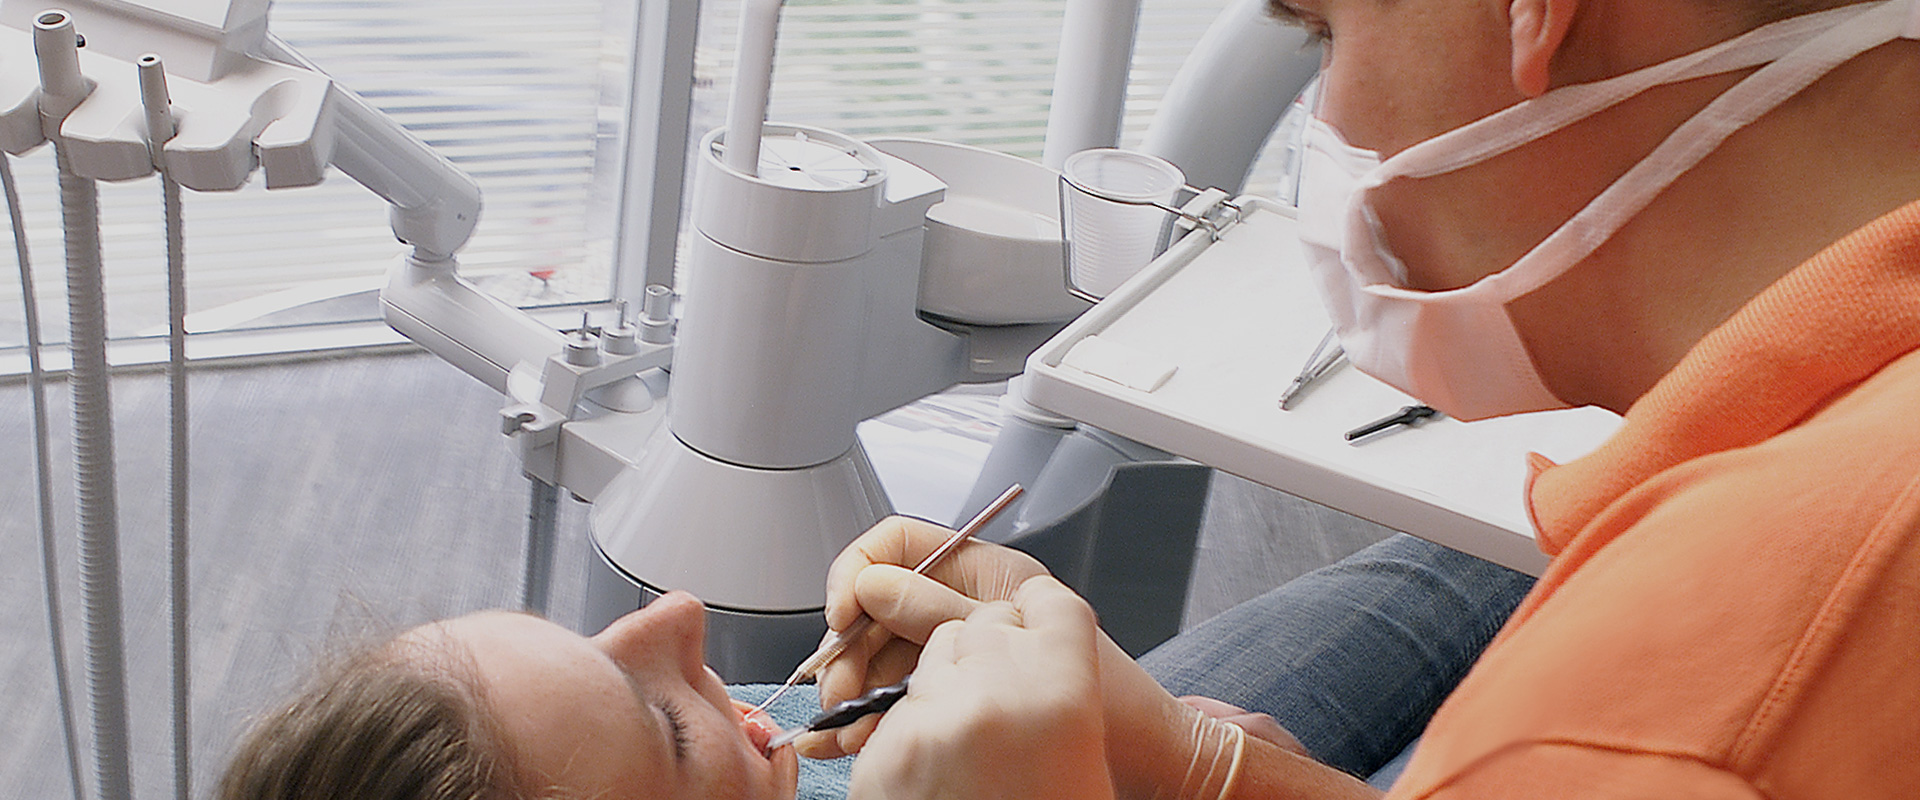 Parodontologie Behandlung Parodontose